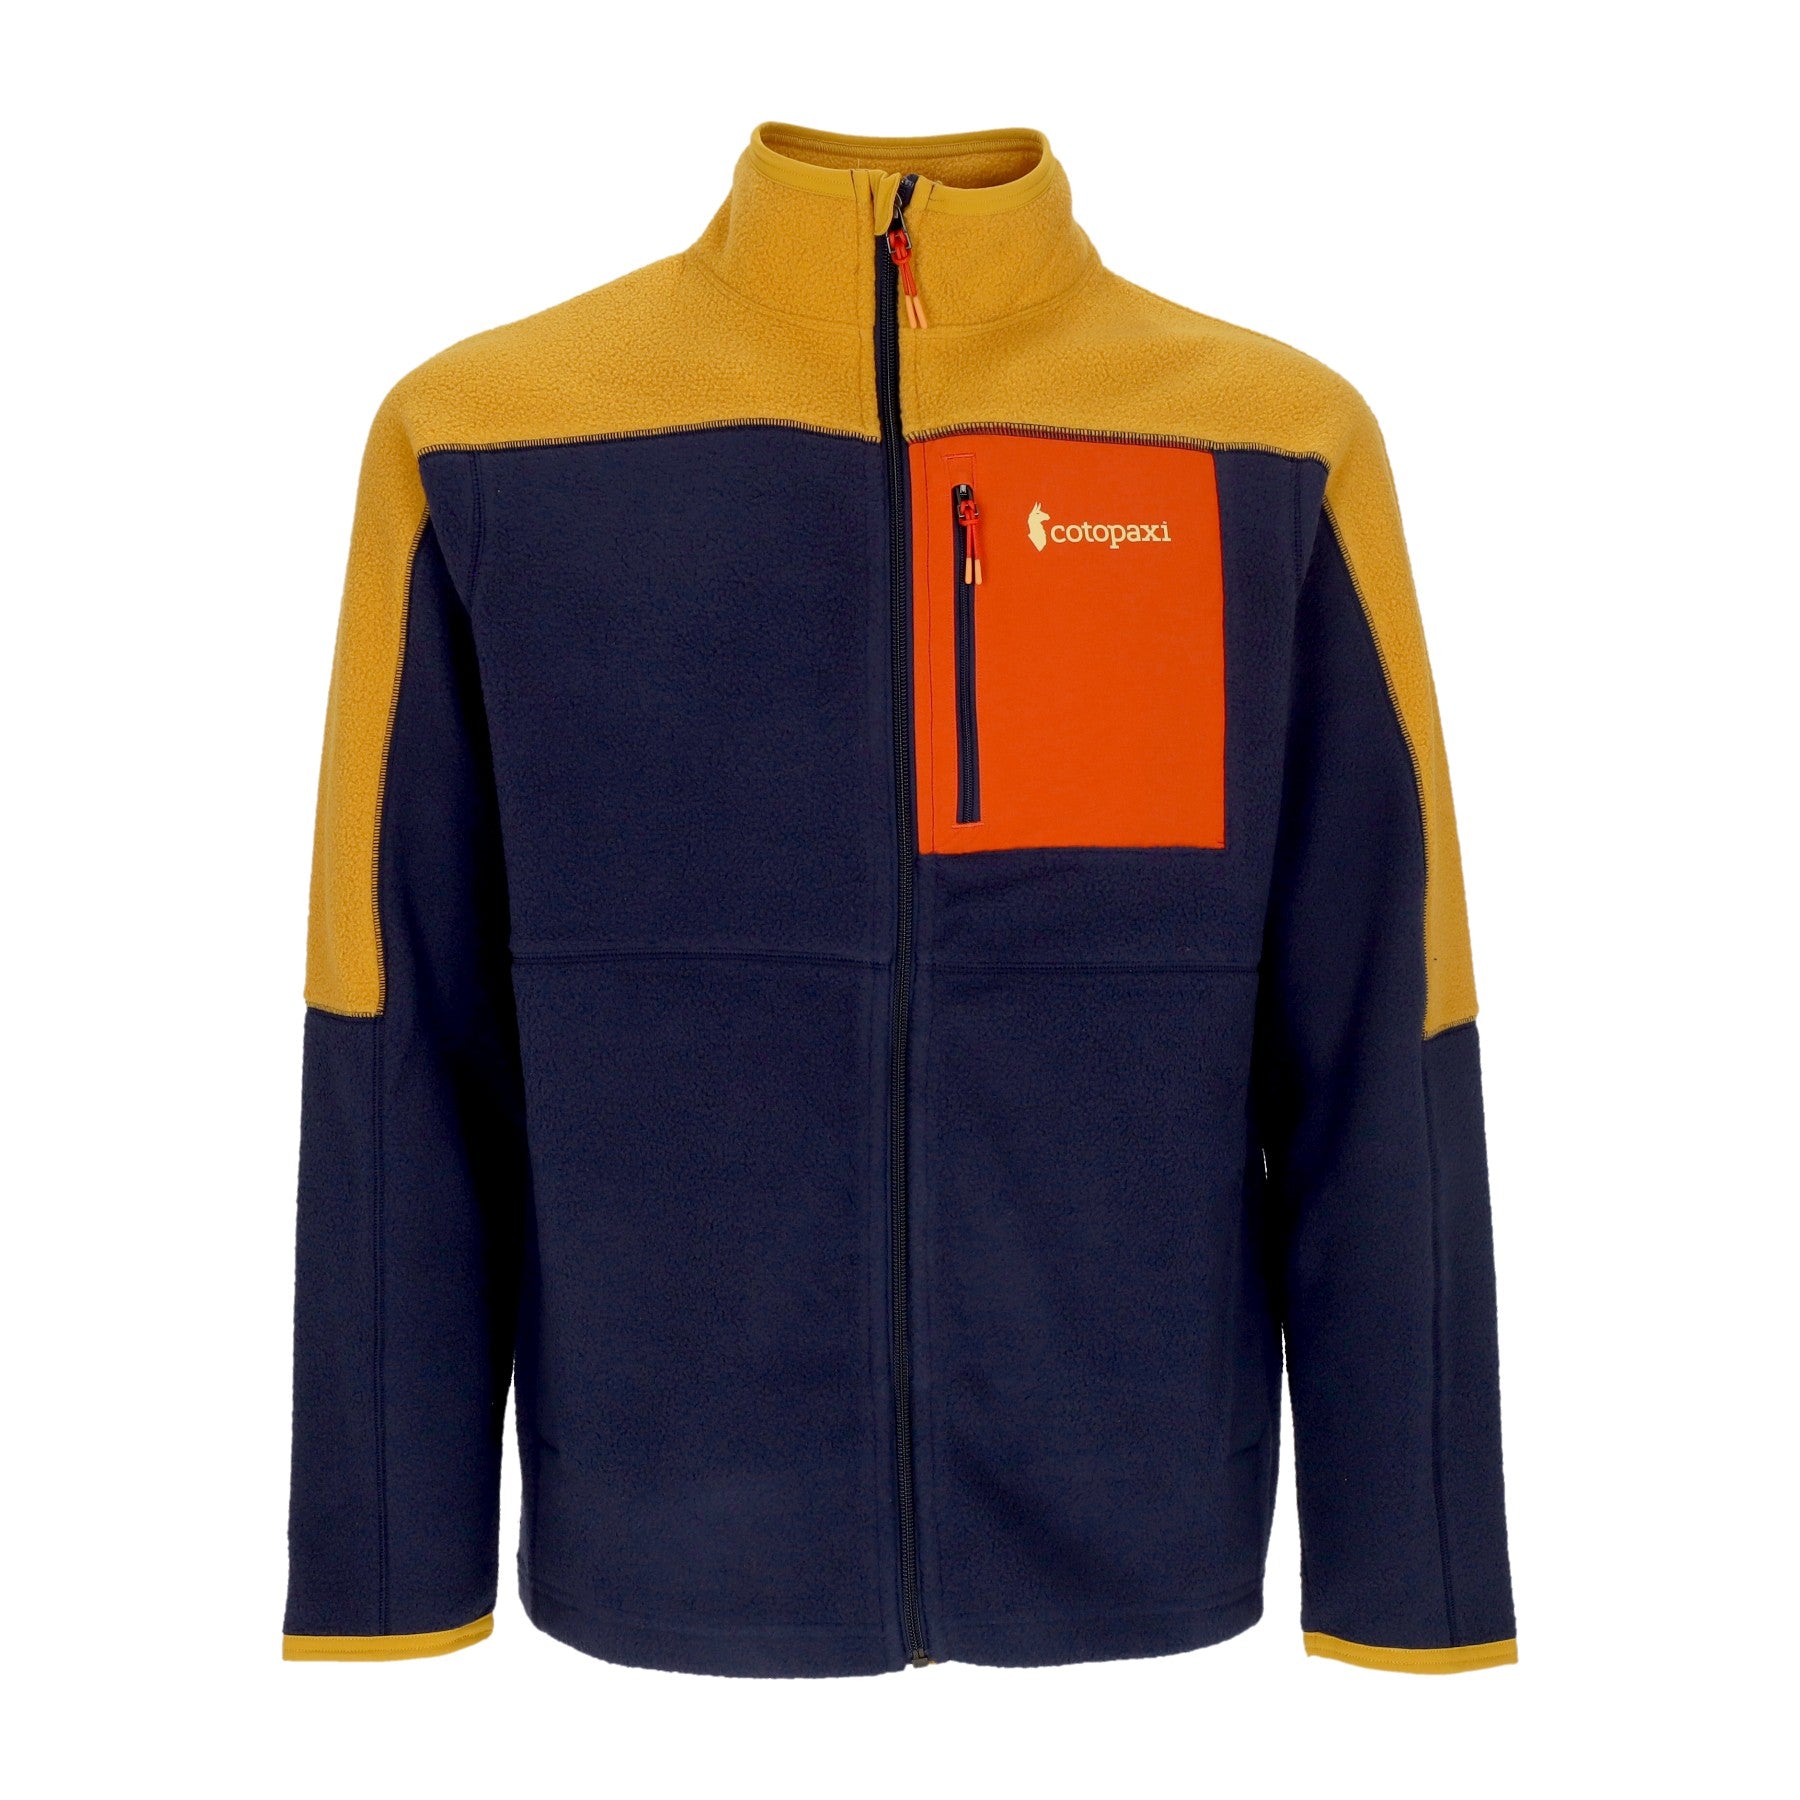 Cotopaxi, Giubbotto Pile Uomo Abrazo Fleece Full-zip Jacket, Amber/maritime